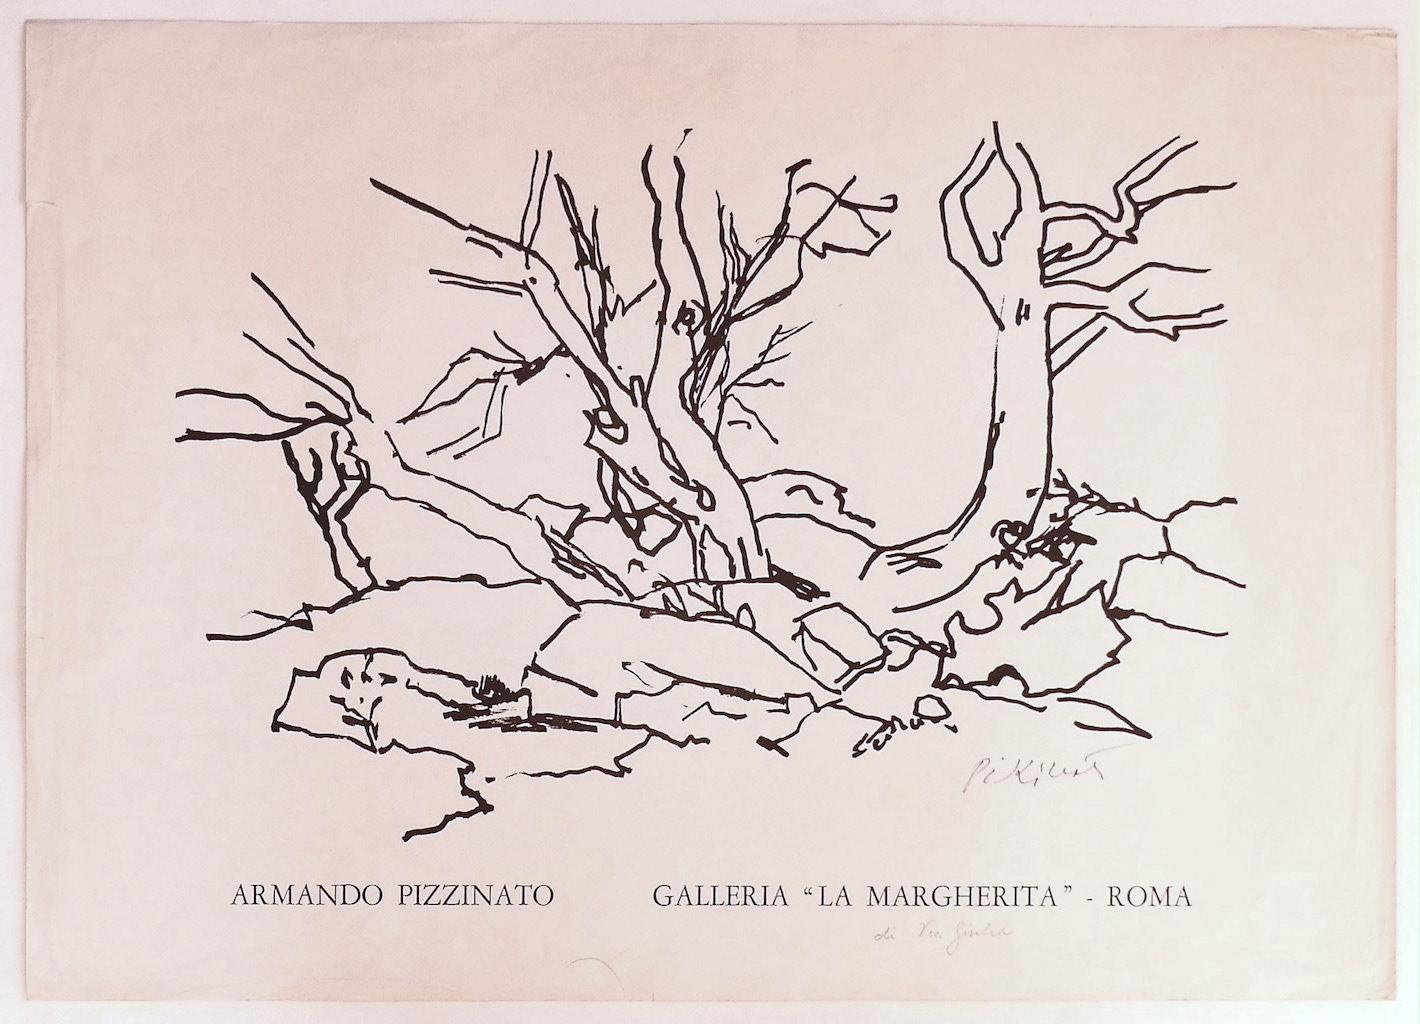 Armando Pizzinato Exhibition Poster - Original Offset Print - Mid-20th Century